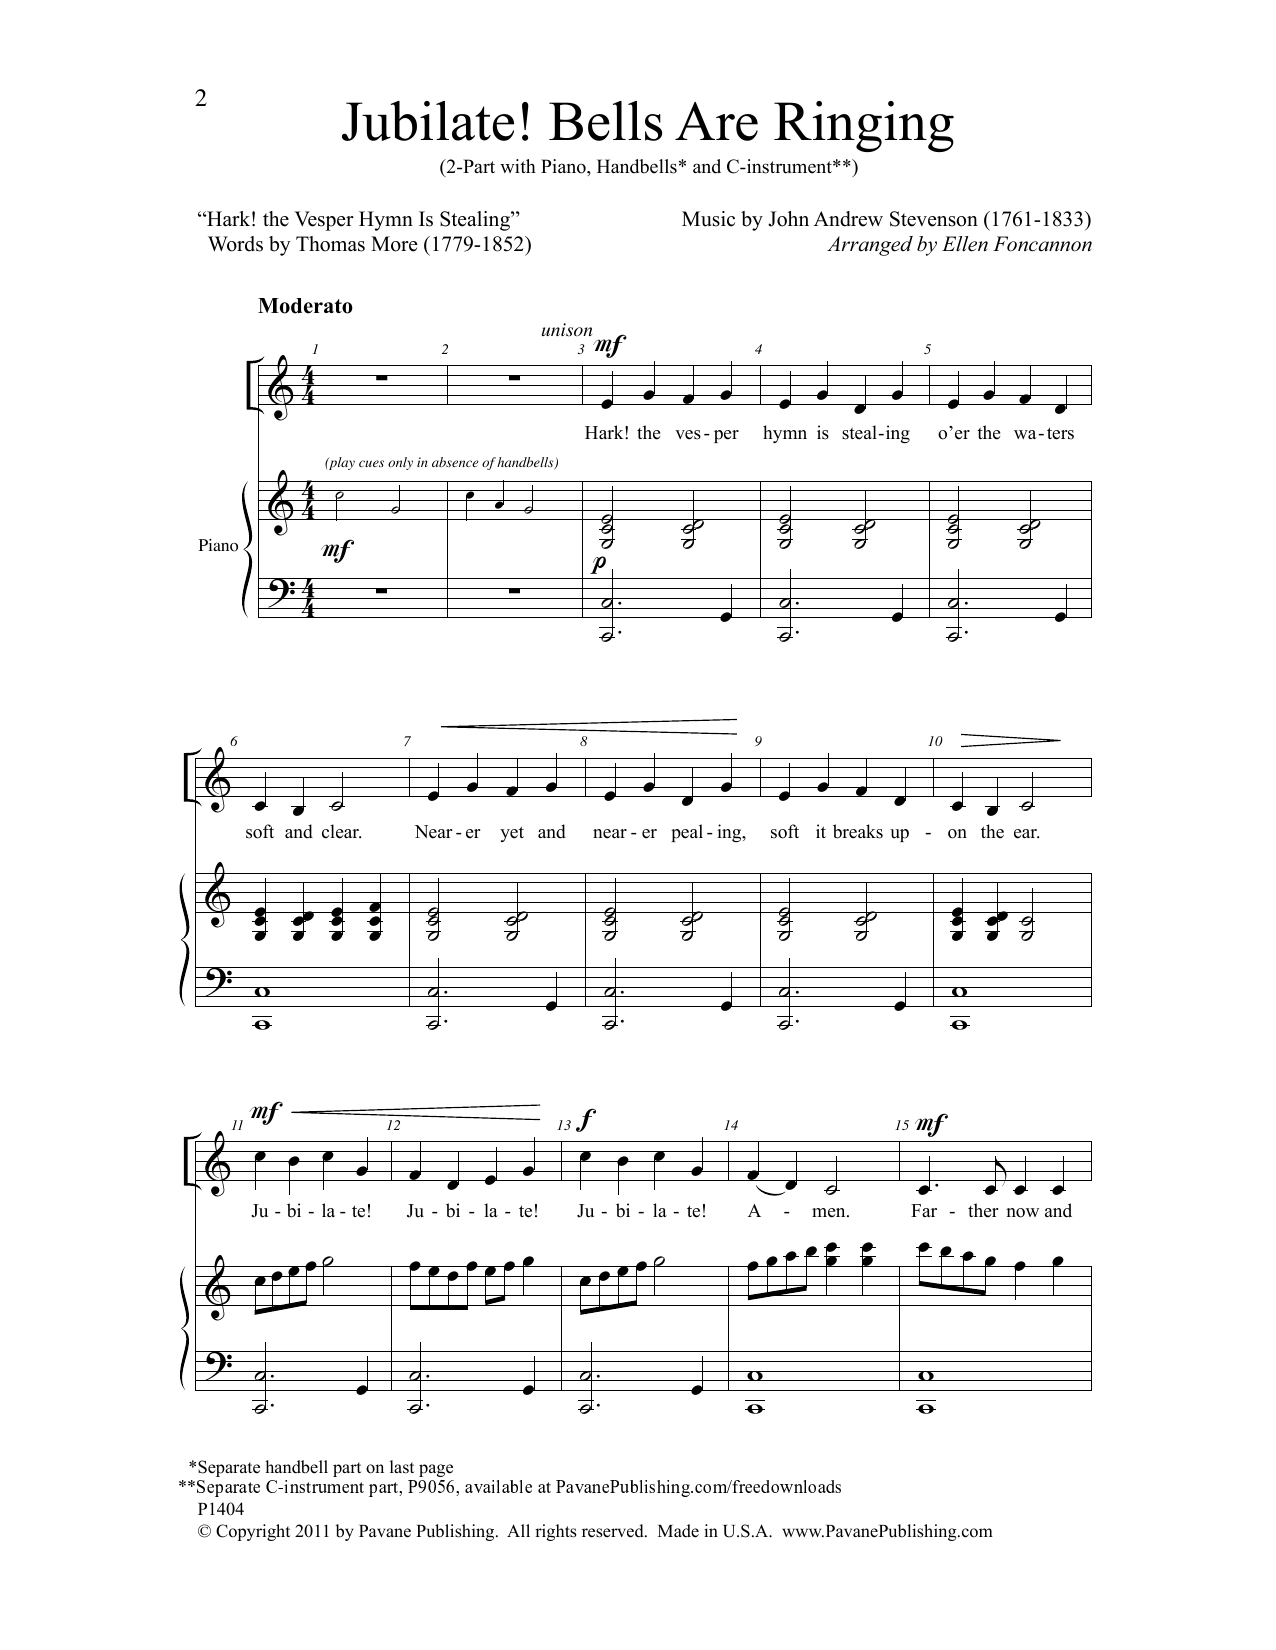 Ellen Foncannon Jubilate! Bells Are Ringing Sheet Music Notes & Chords for Choral - Download or Print PDF